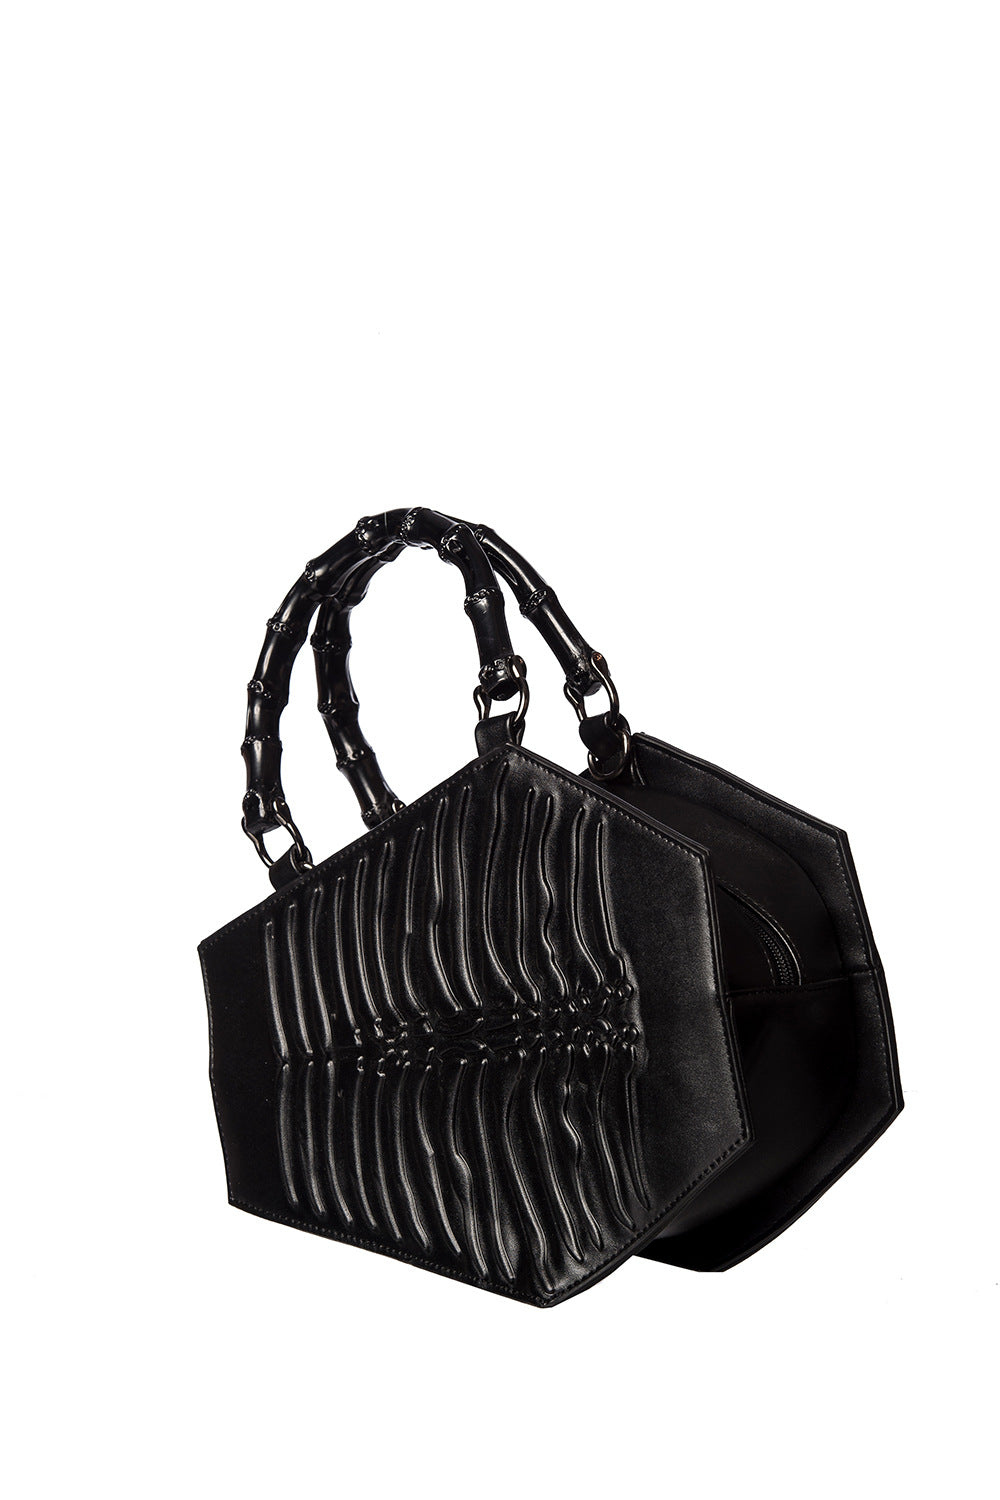 Ribcage print emboss coffin shaped handbag